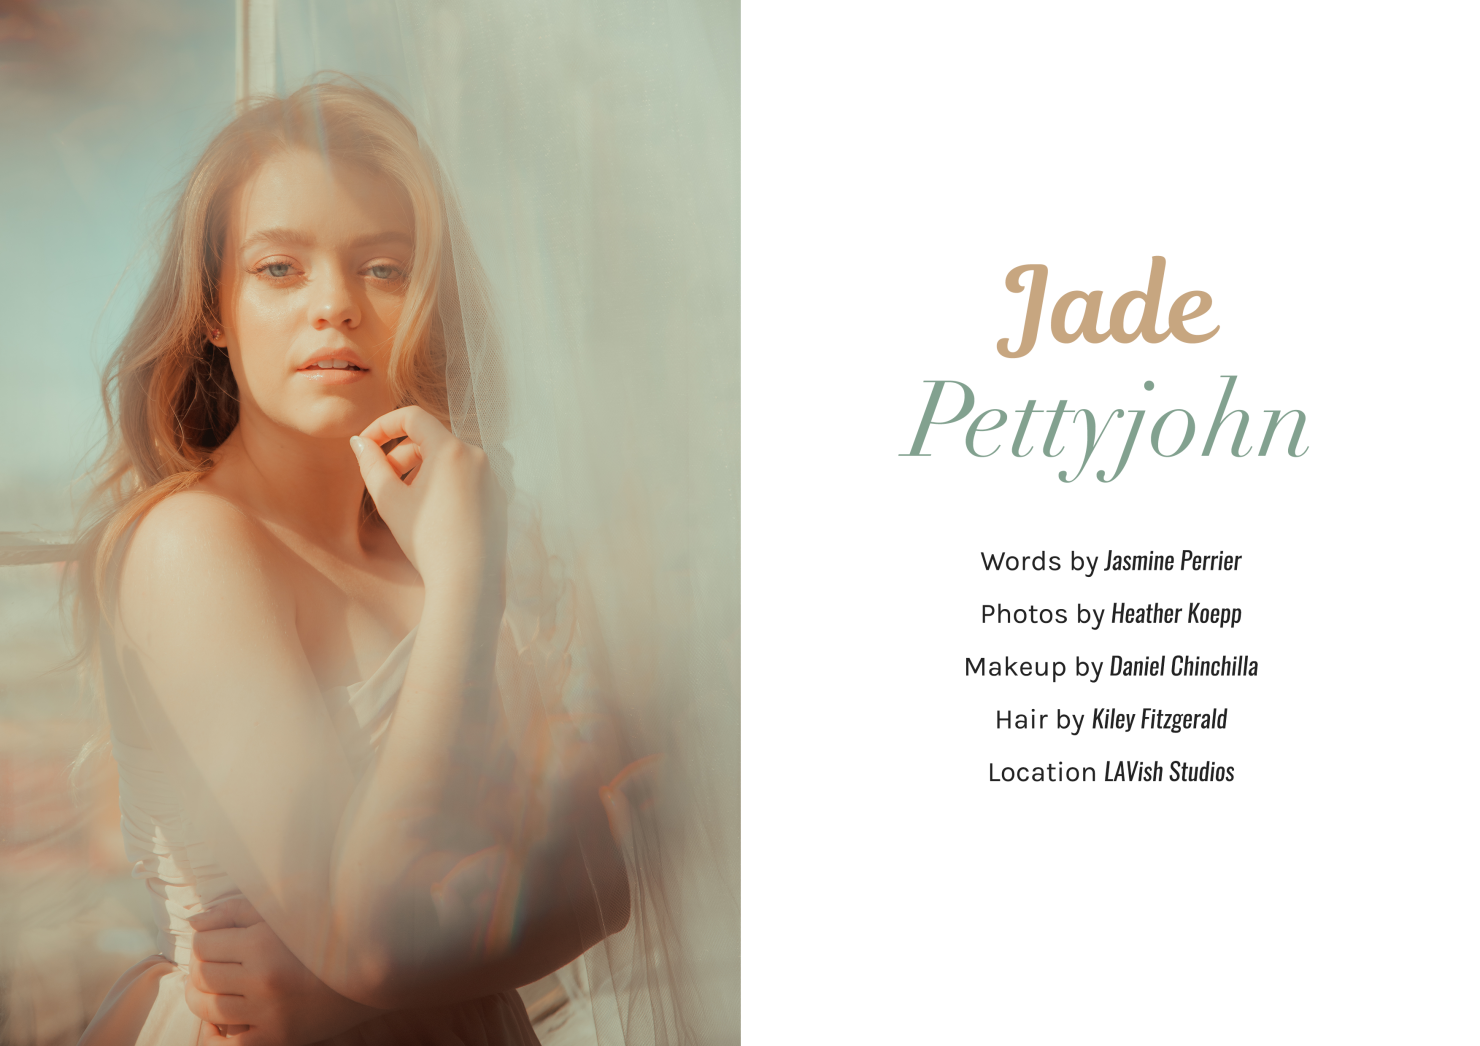 Jade Pettyjohn â€“ Grumpy Magazine (December 2018)